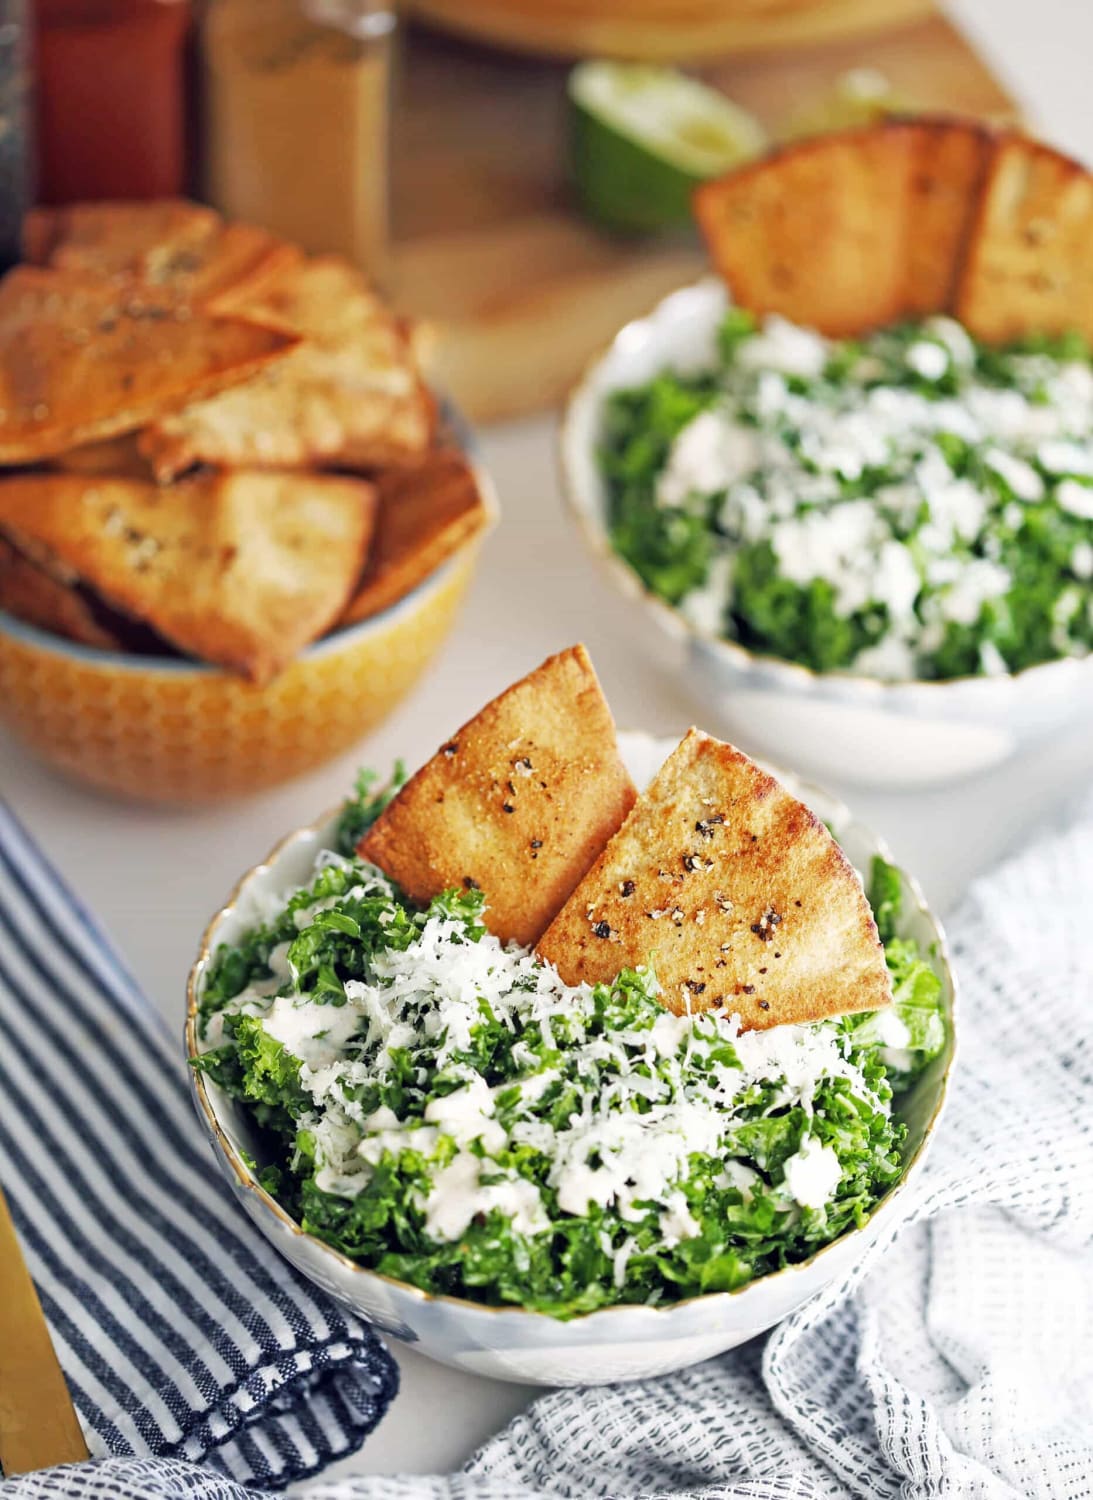 Parmesan Kale Salad with Garlic Lime Dressing and Pita Chips